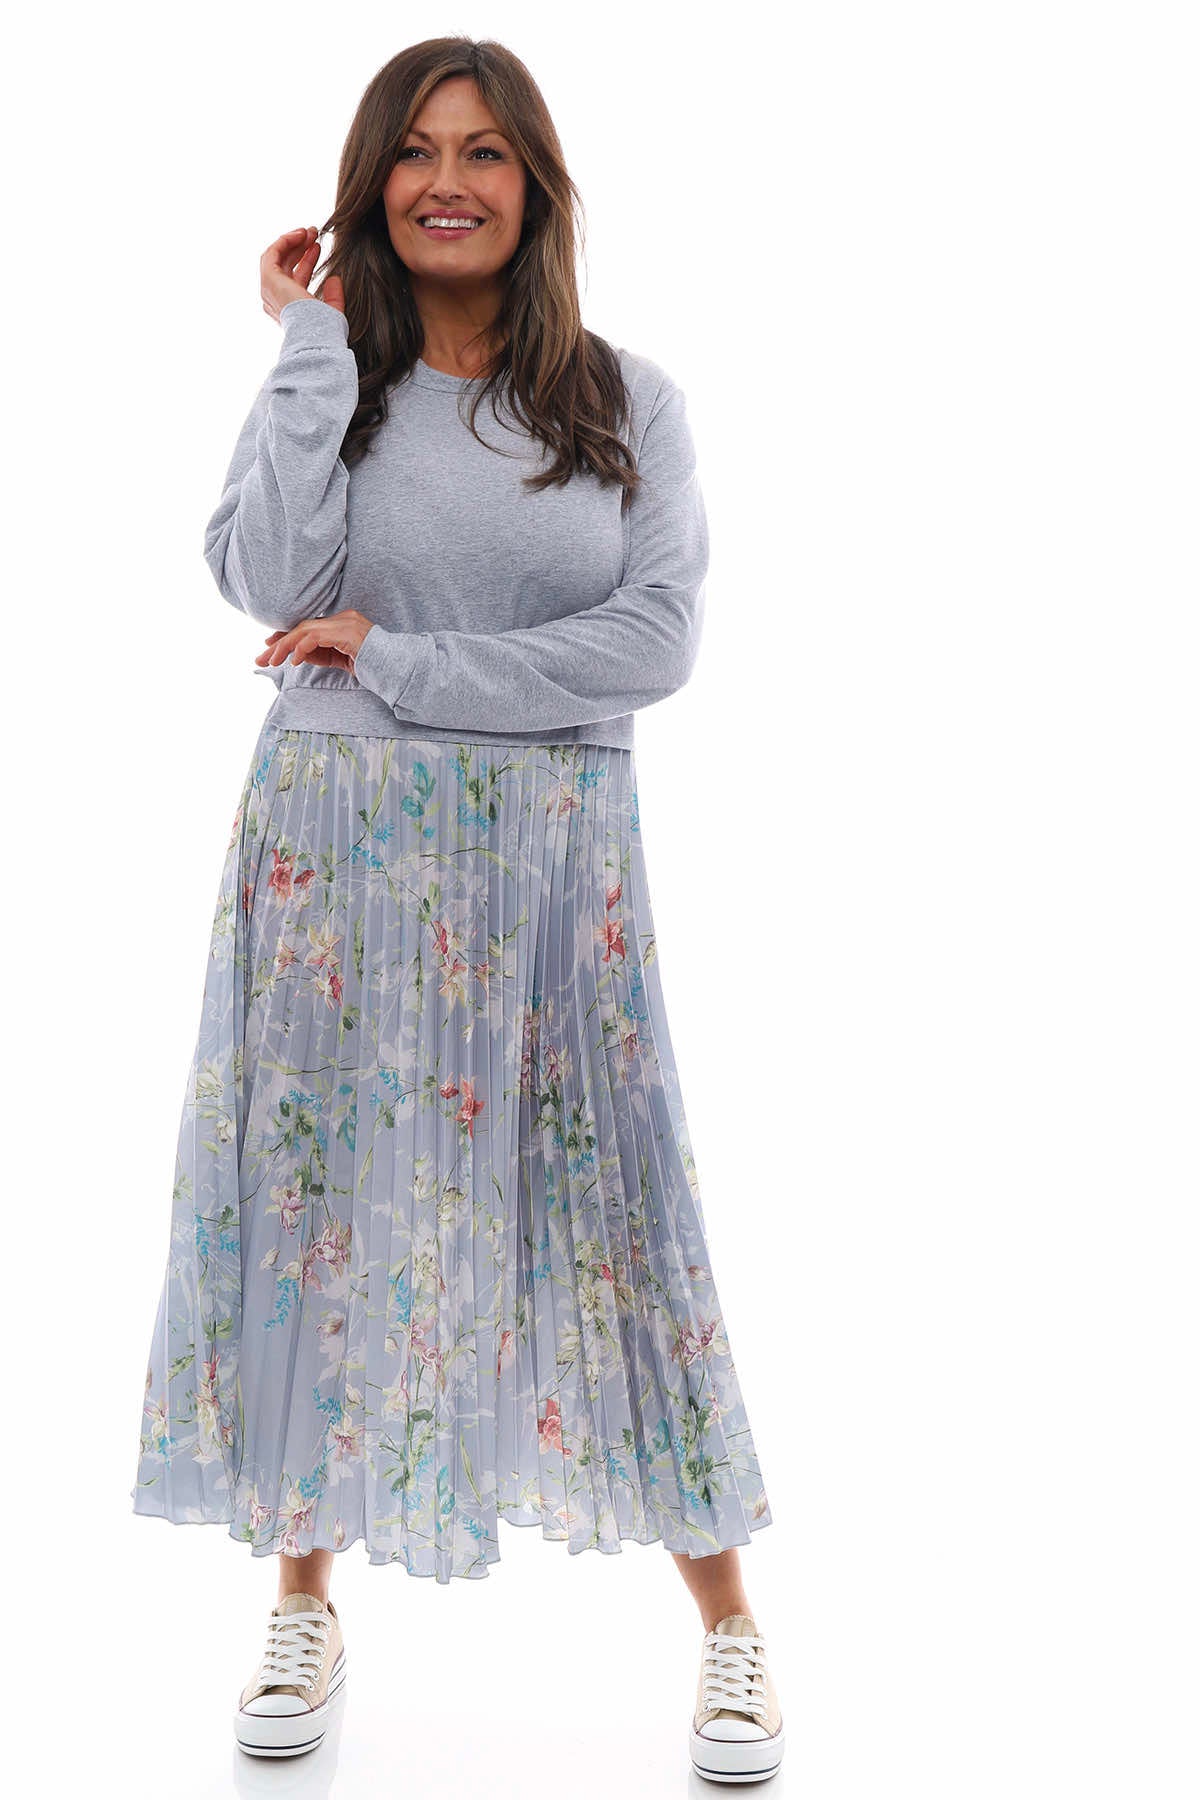 Kinzle Lightweight Floral Pleated Jumper Dress Marl Grey